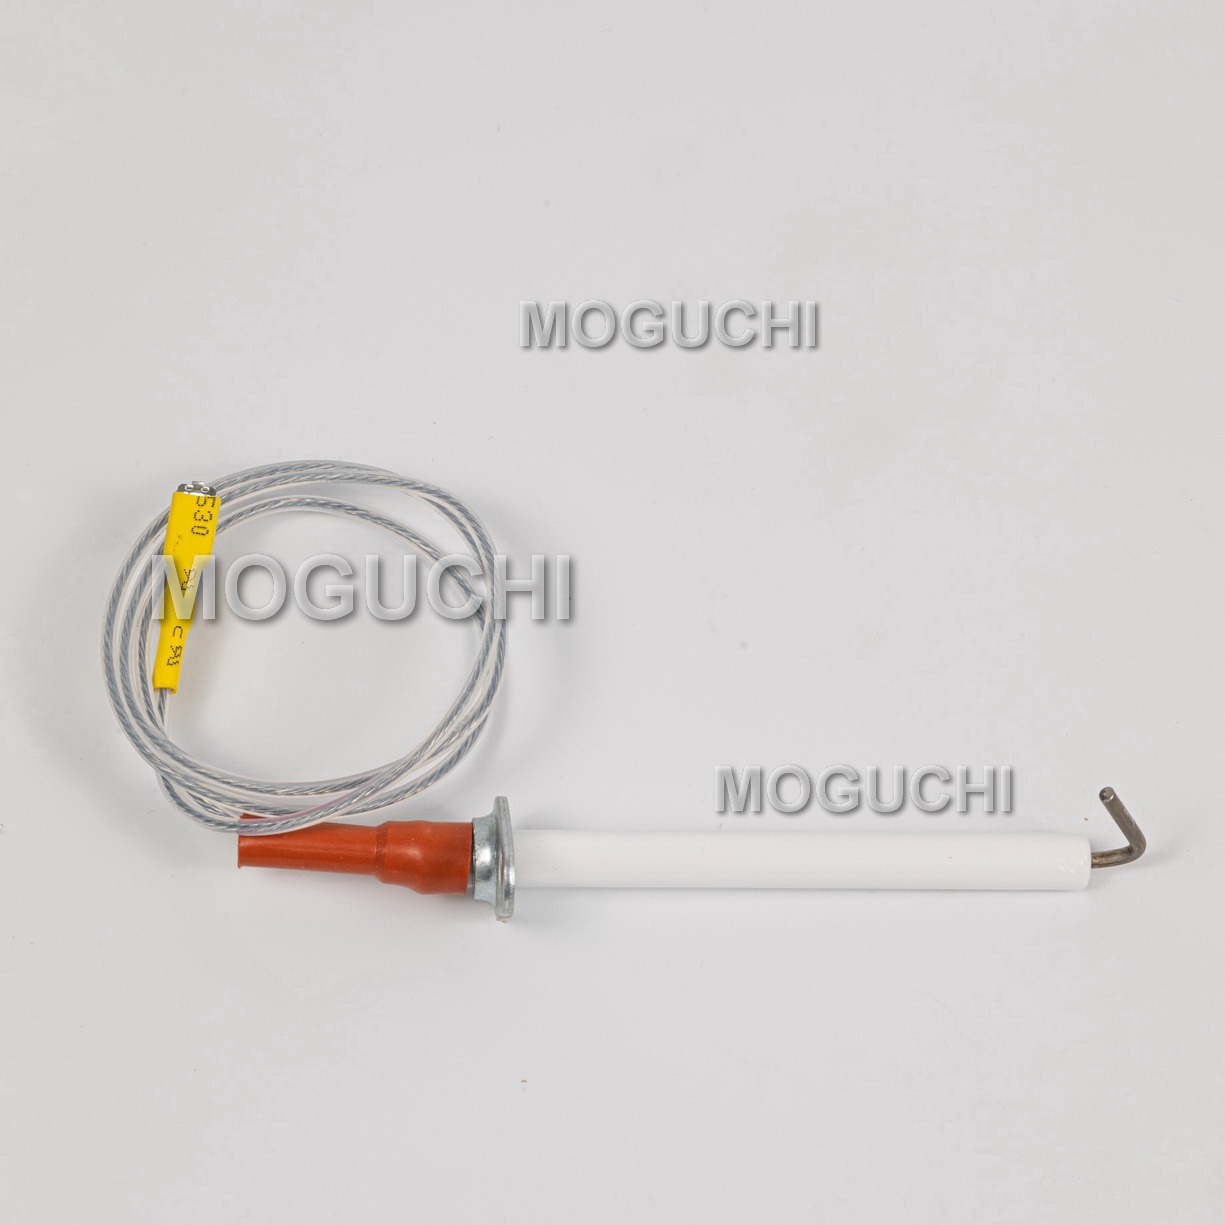 Moguchi gbl 24f